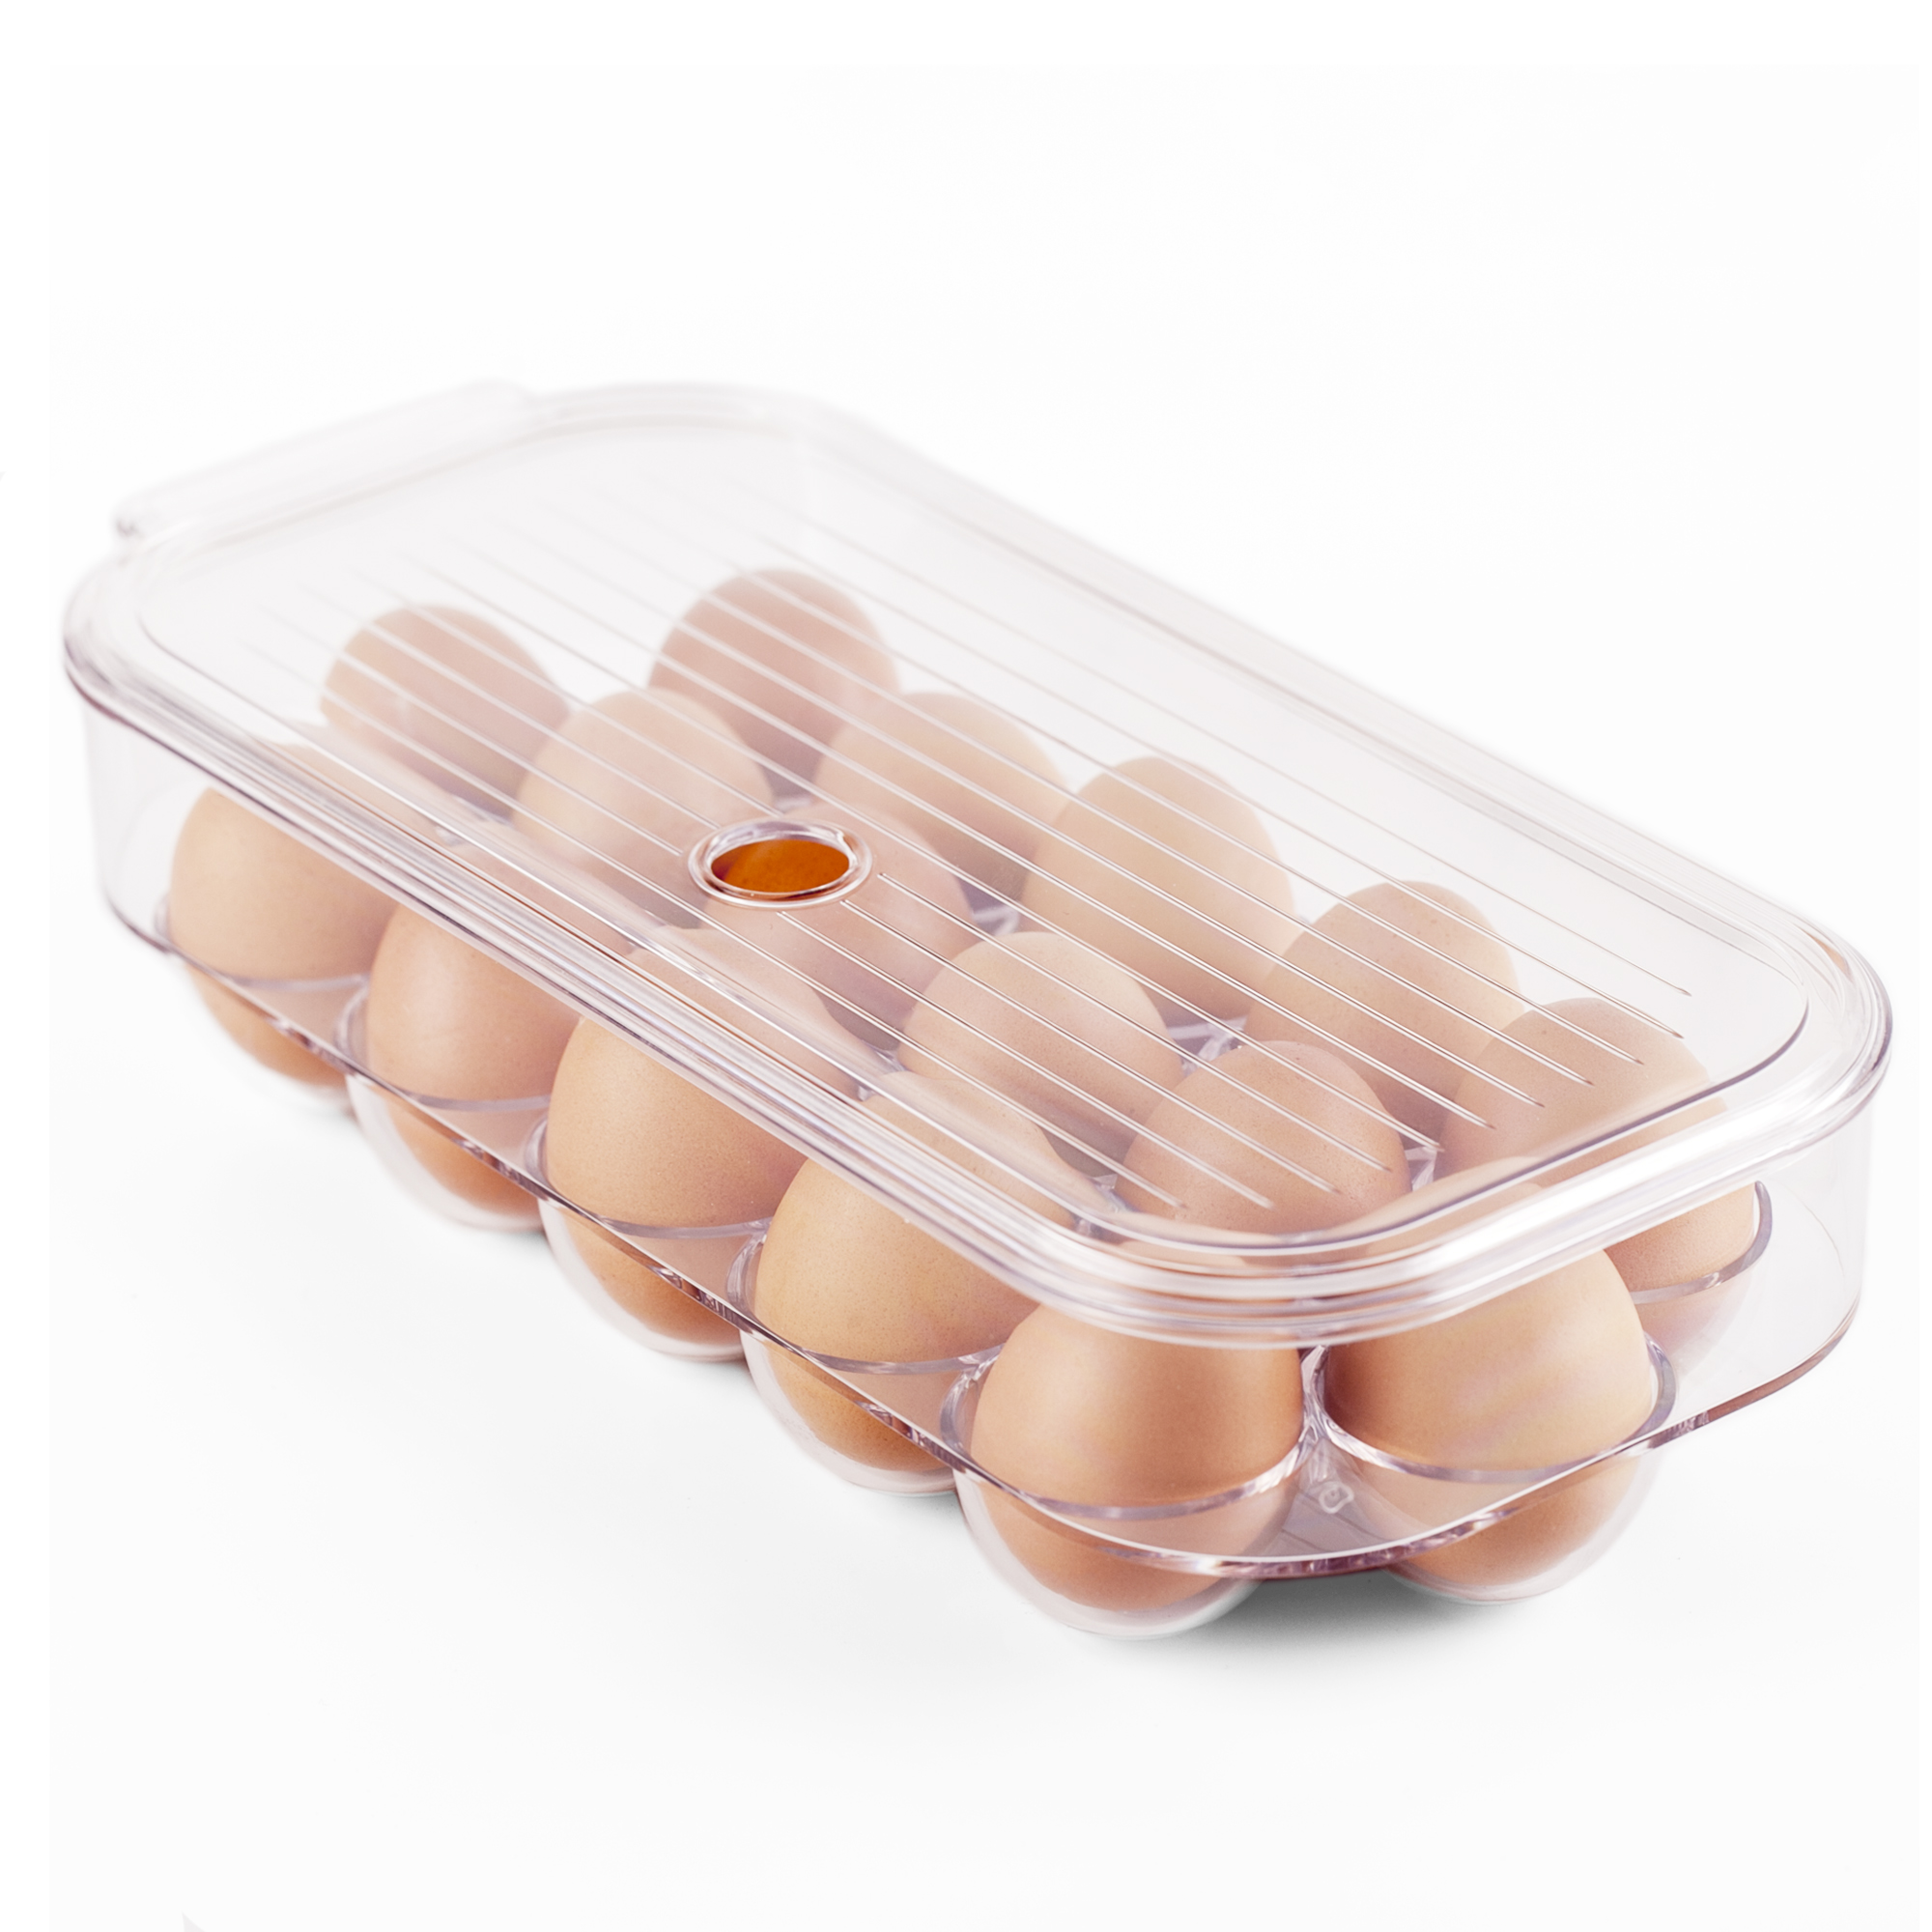 plazotta-eierhalter-eier-box-16-eier-eierbehaelter-eiertraeger-aufbewahrungsbox-kuehlschrank-hauptbild1-1xU4QdTcmdFUJIv